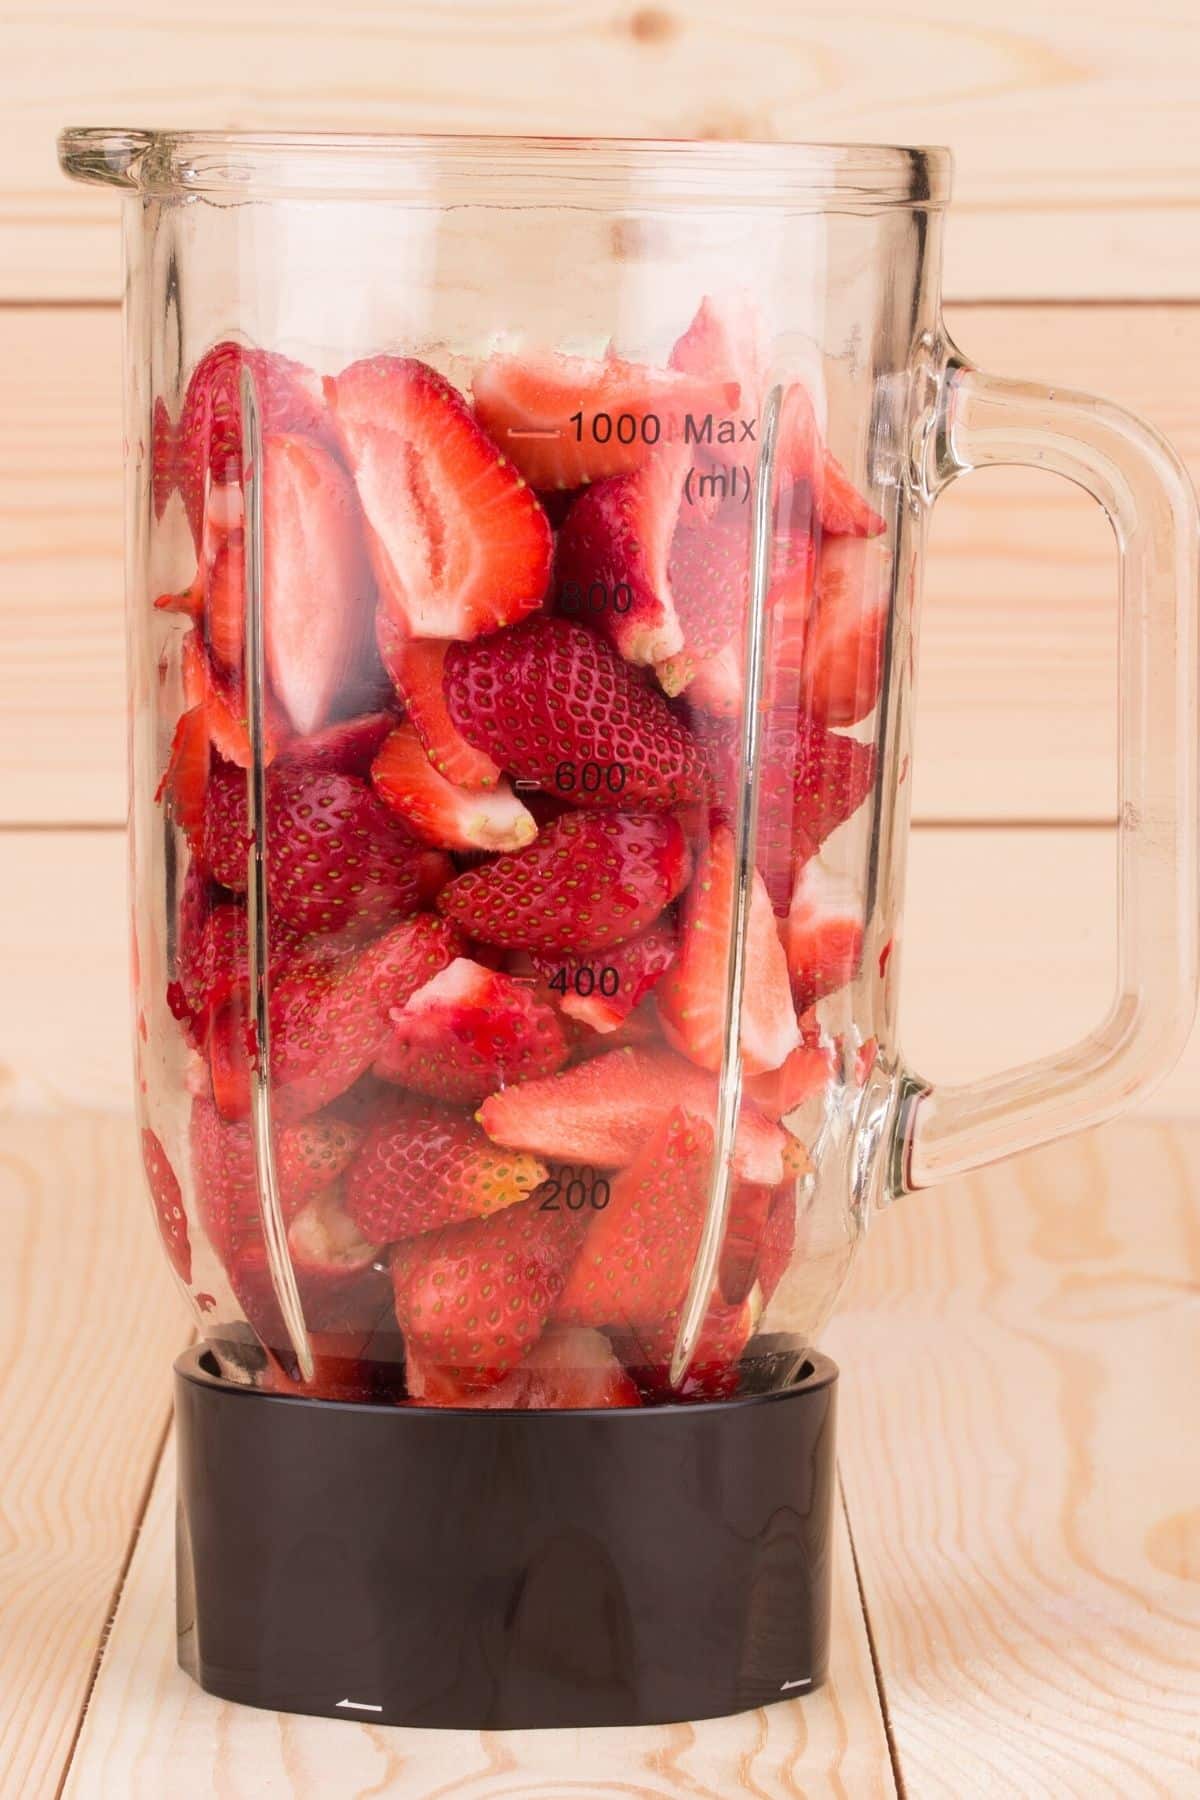 quartered strawberries in a blender jar ready to be blended.